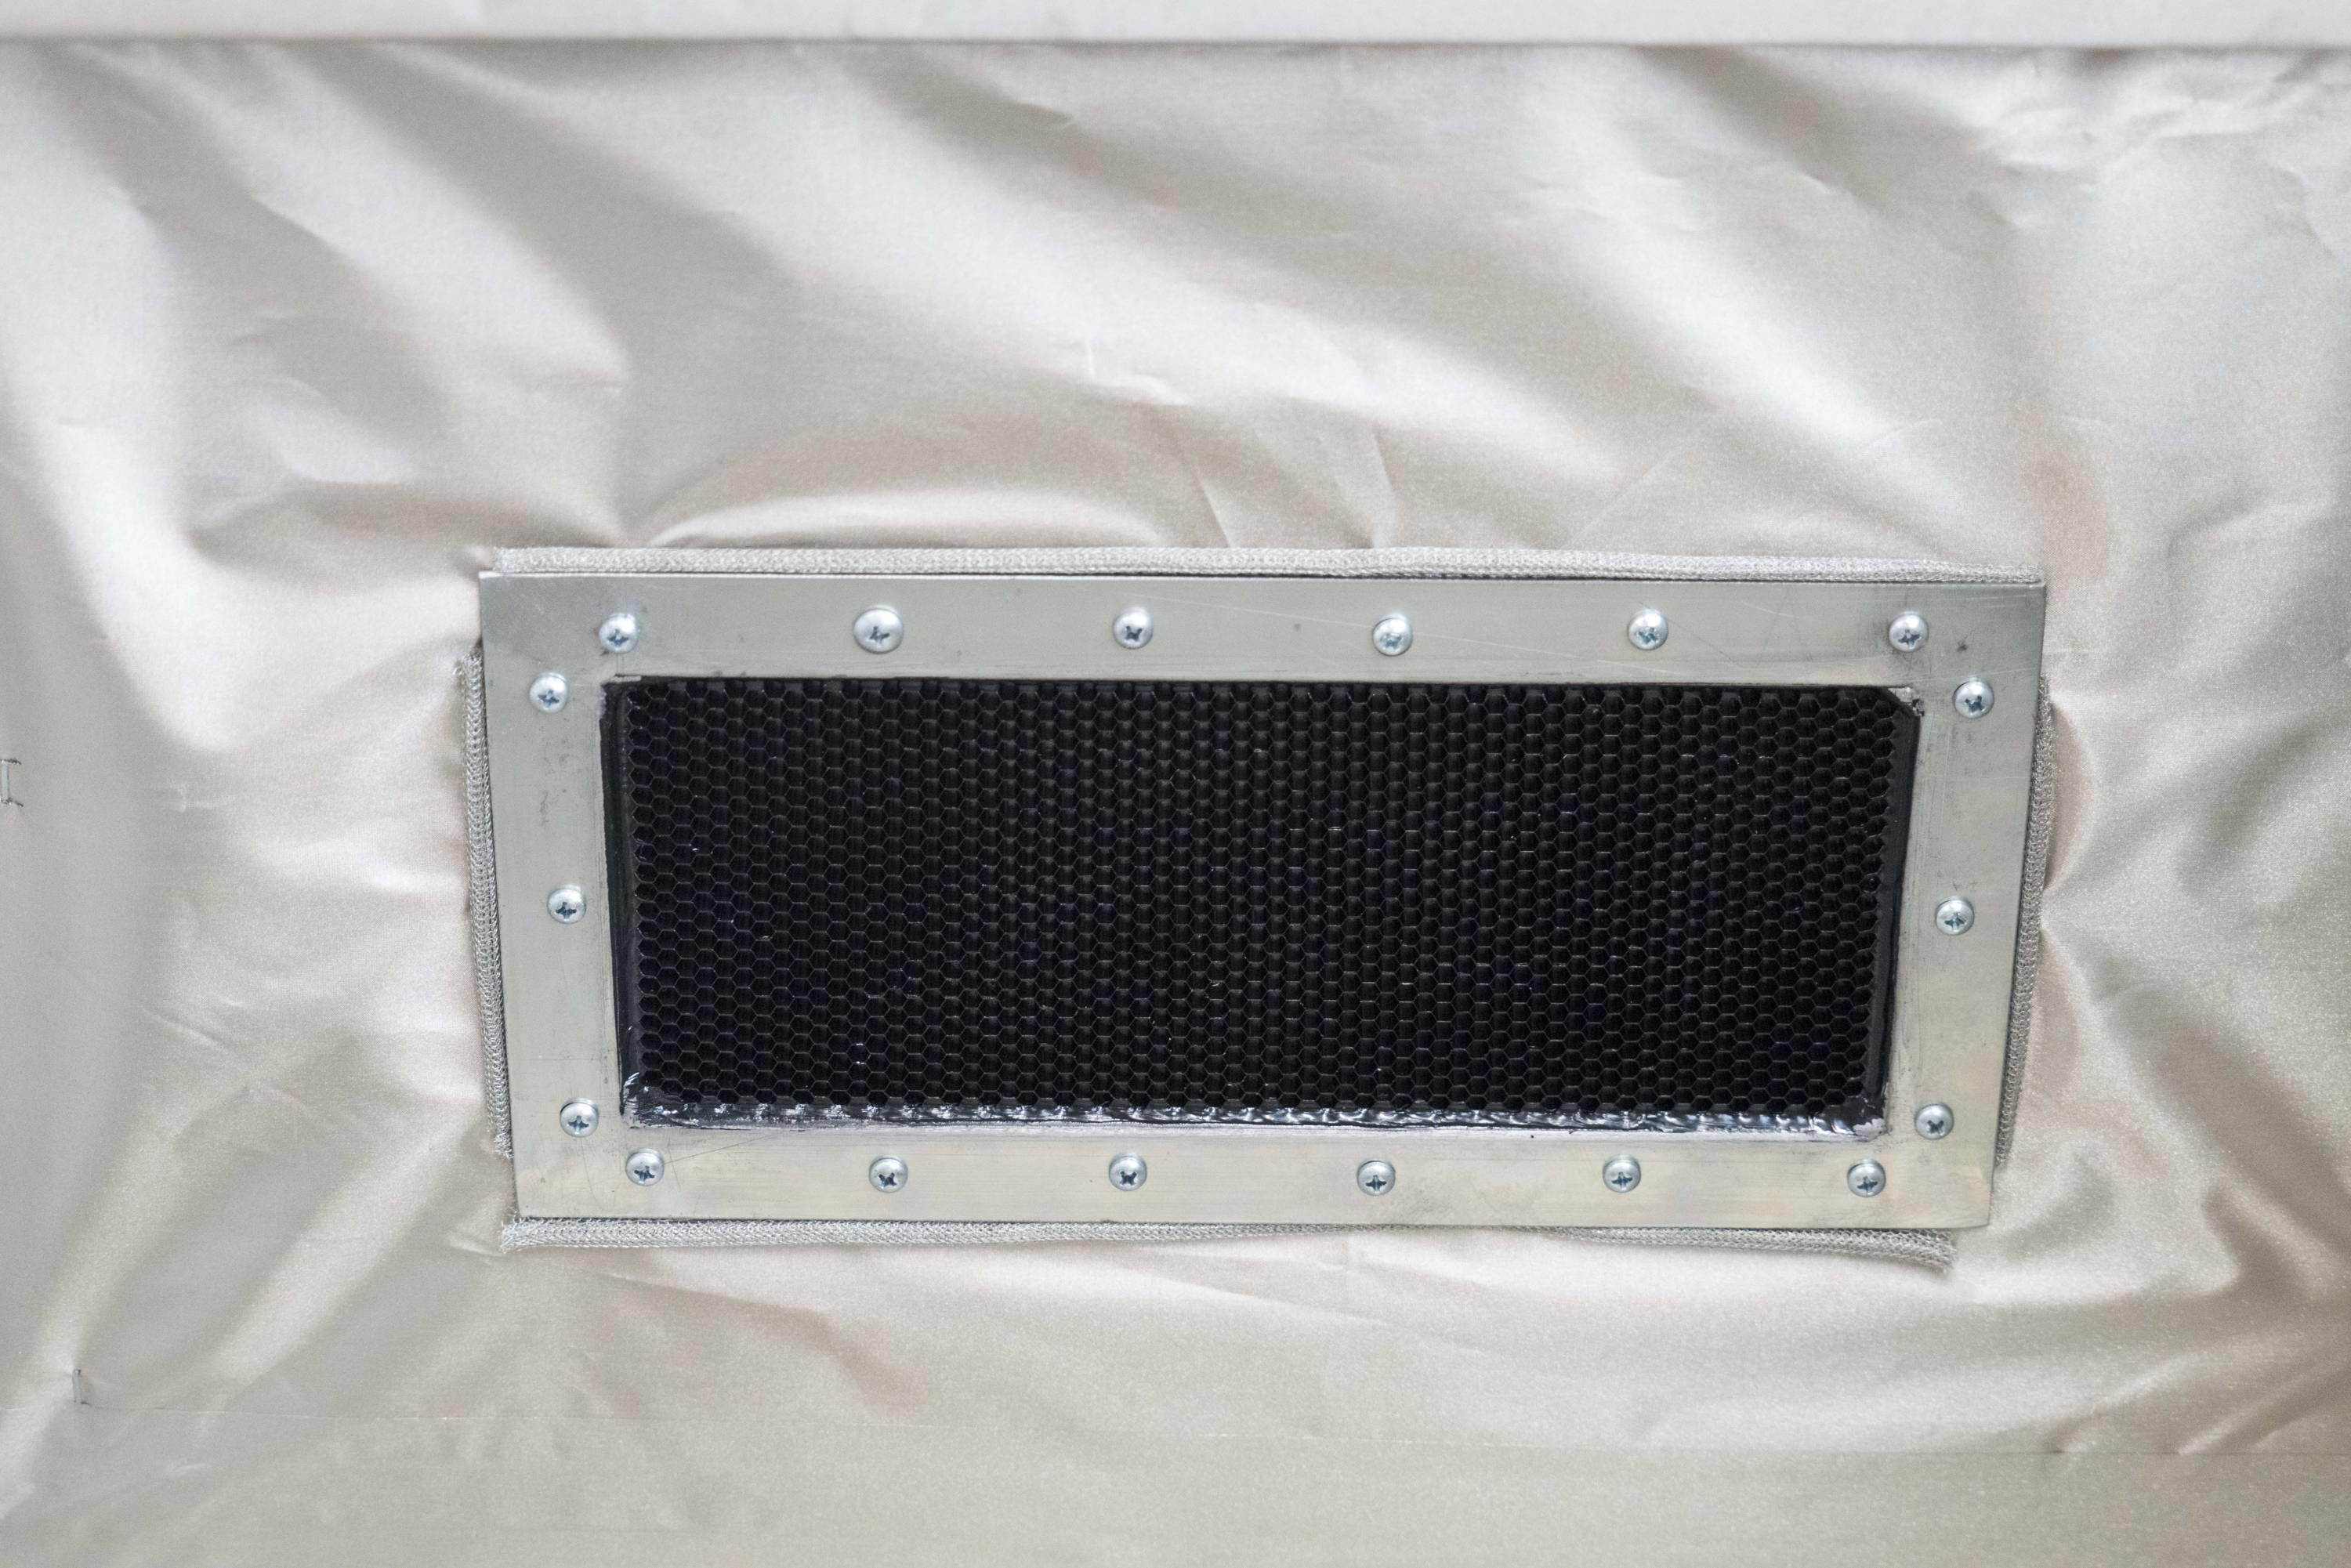 Mission Darkness EMF Shielded Honeycomb Air Ventilation Panel blocks RF signals allows air flow